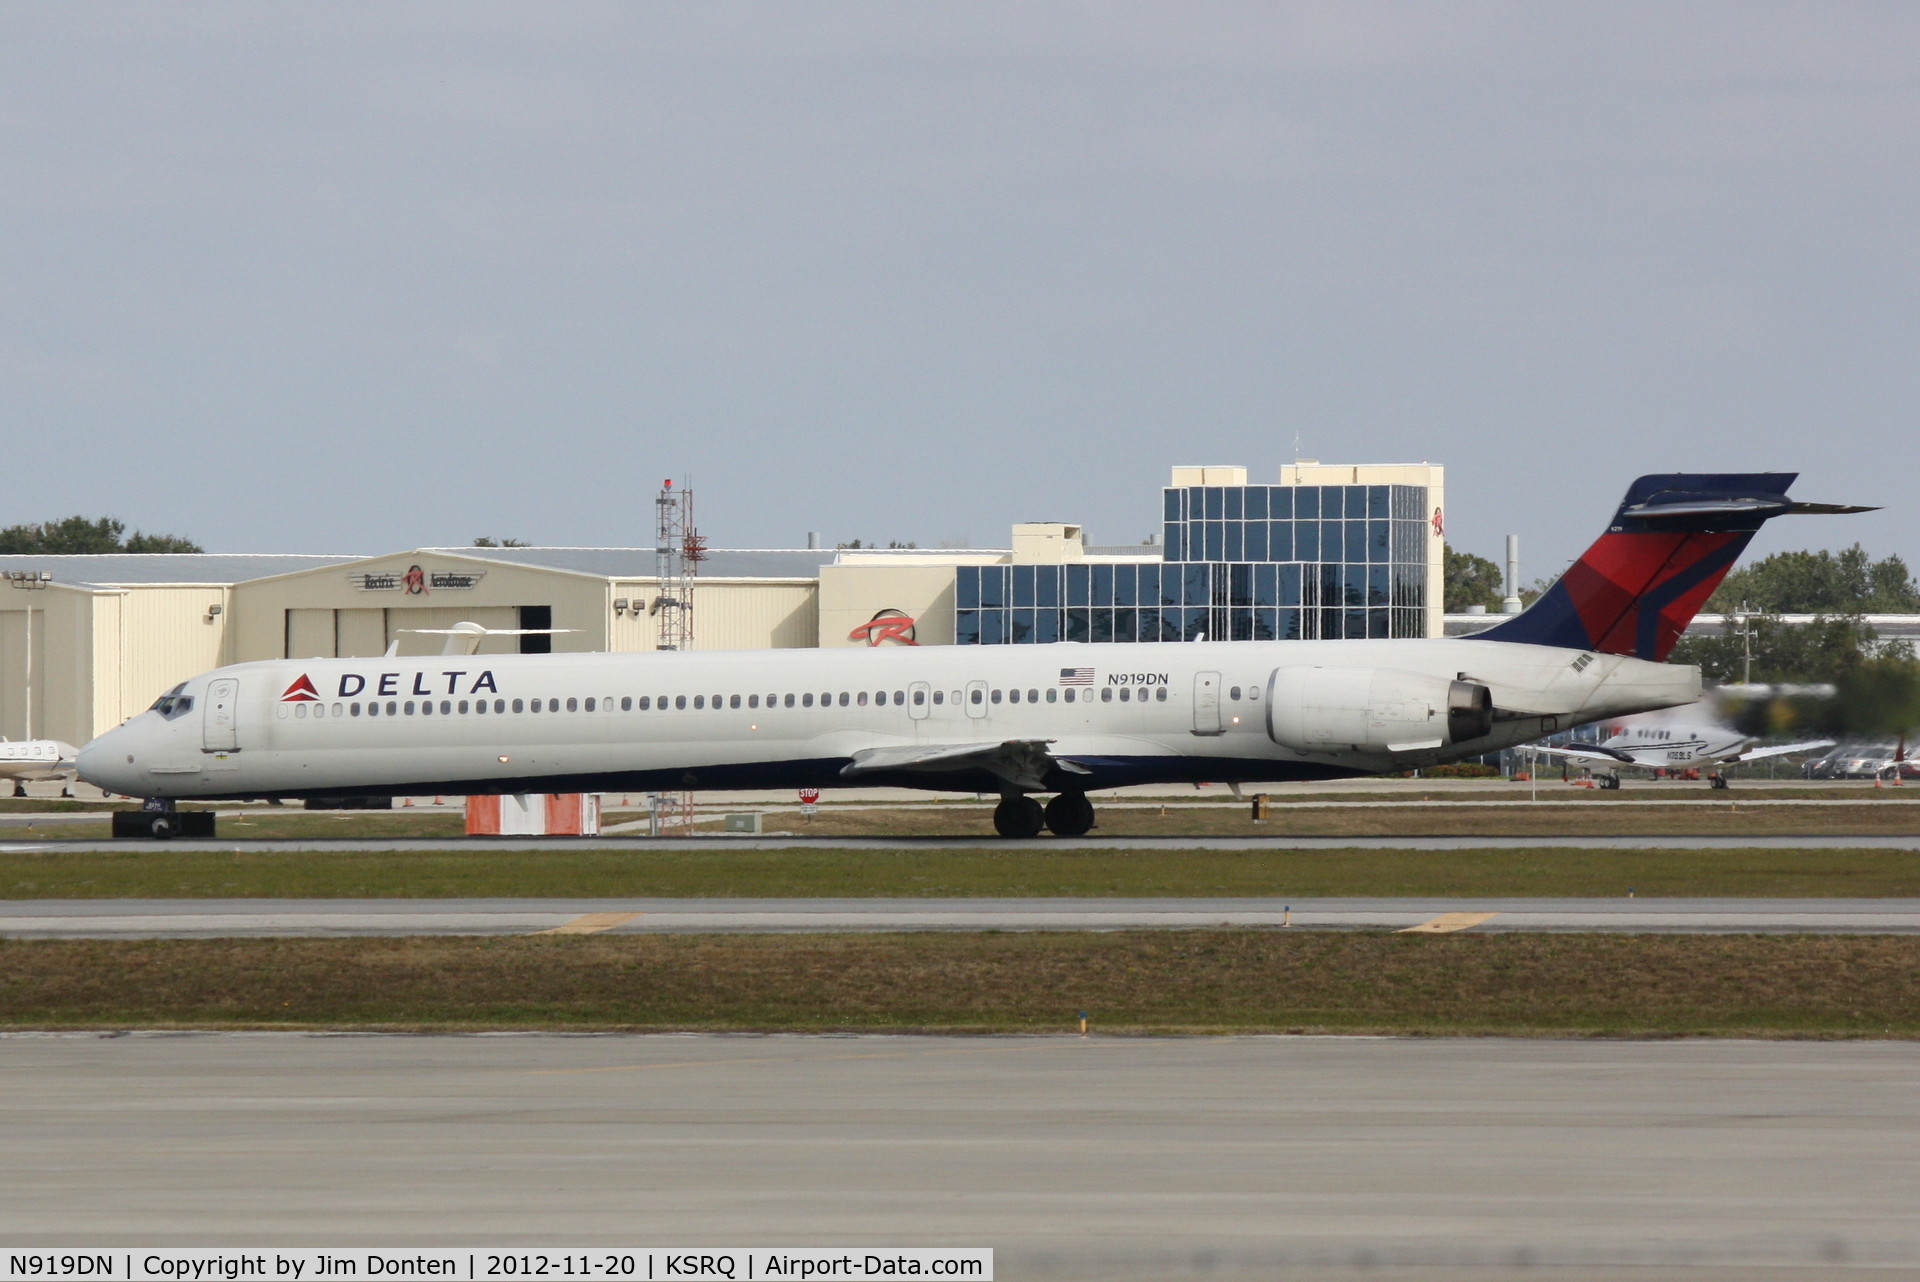 N919DN, McDonnell Douglas MD-90-30 C/N 53553, Delta Flight 2298 (N919DN) departs Sarasota-Bradenton International Airport enroute to Hartsfield-Jackson Atlanta International Airport